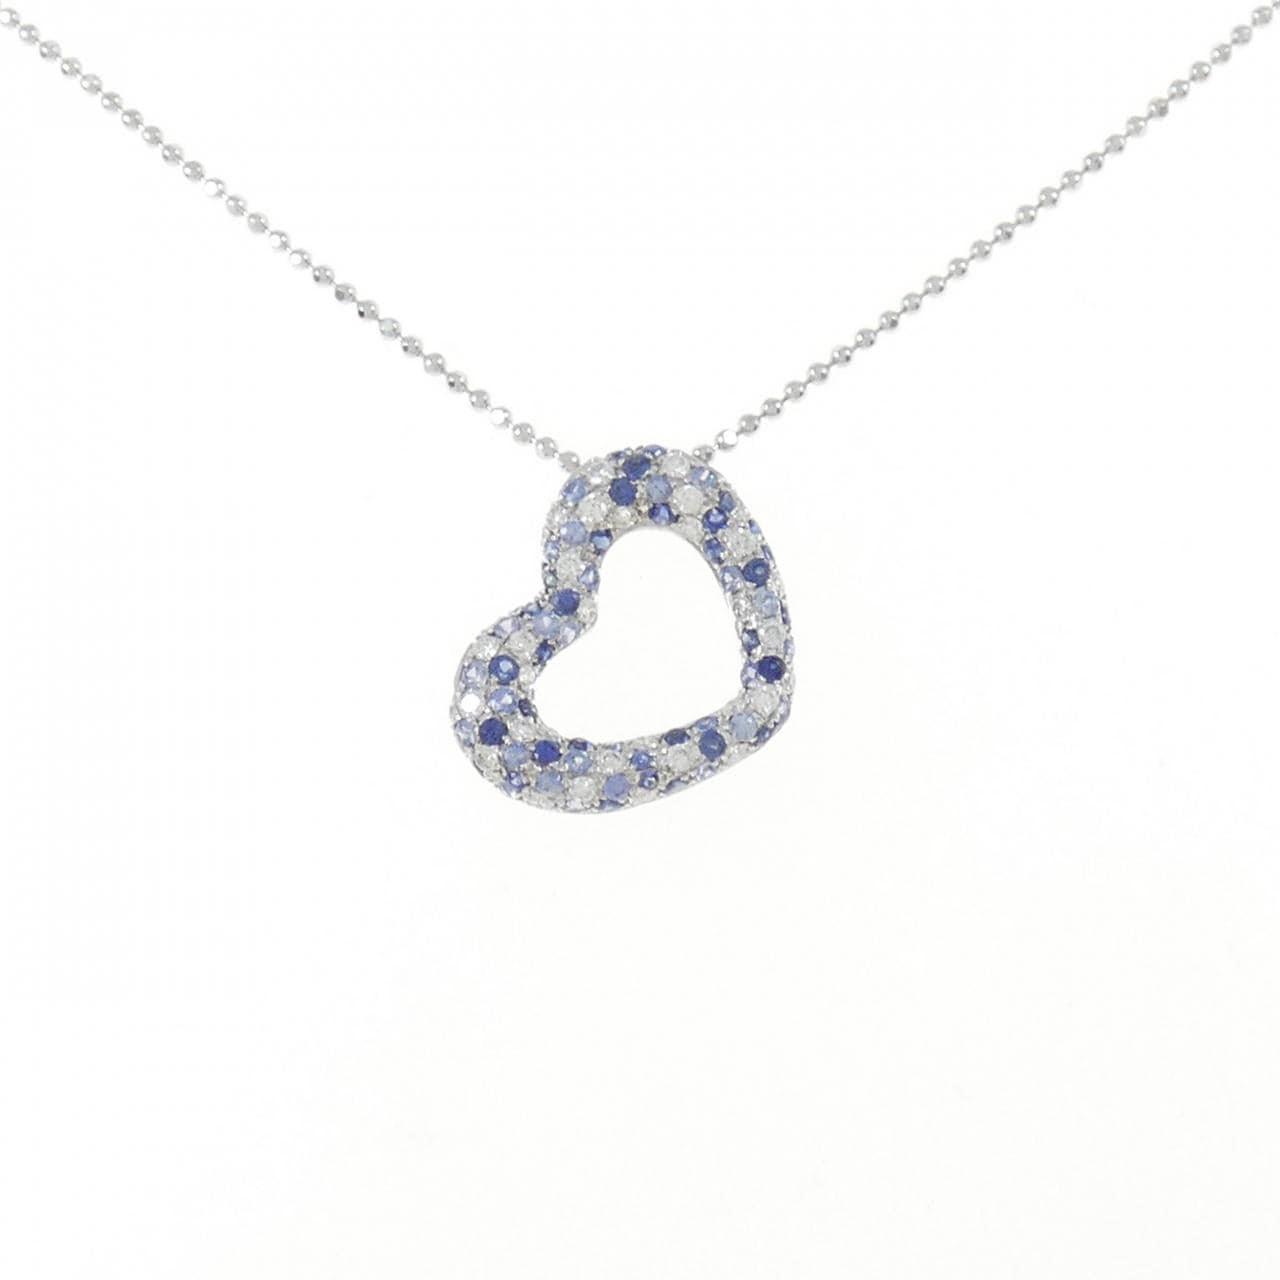 K18WG heart sapphire necklace 0.71CT